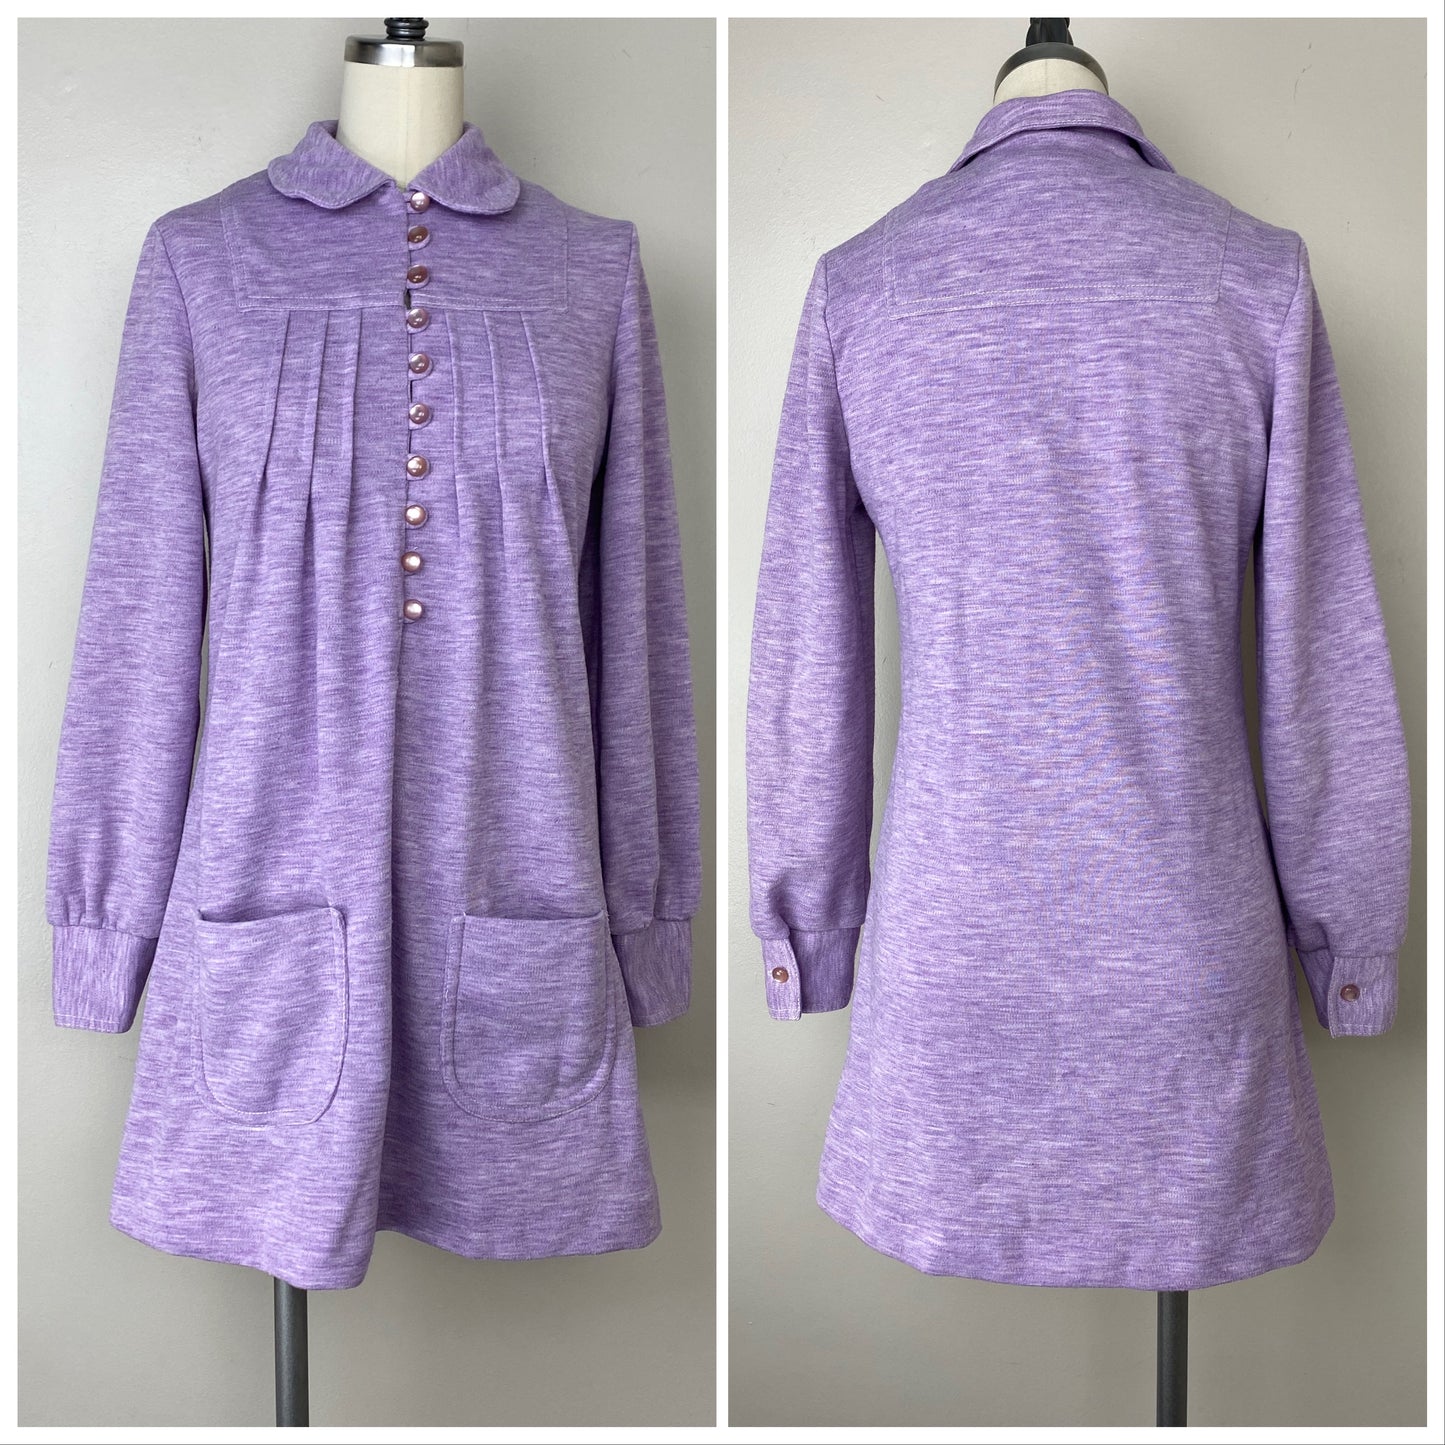 1970s Mod Knit Mini Dress, Size Small, Heathered Purple, Peter Pan Collar